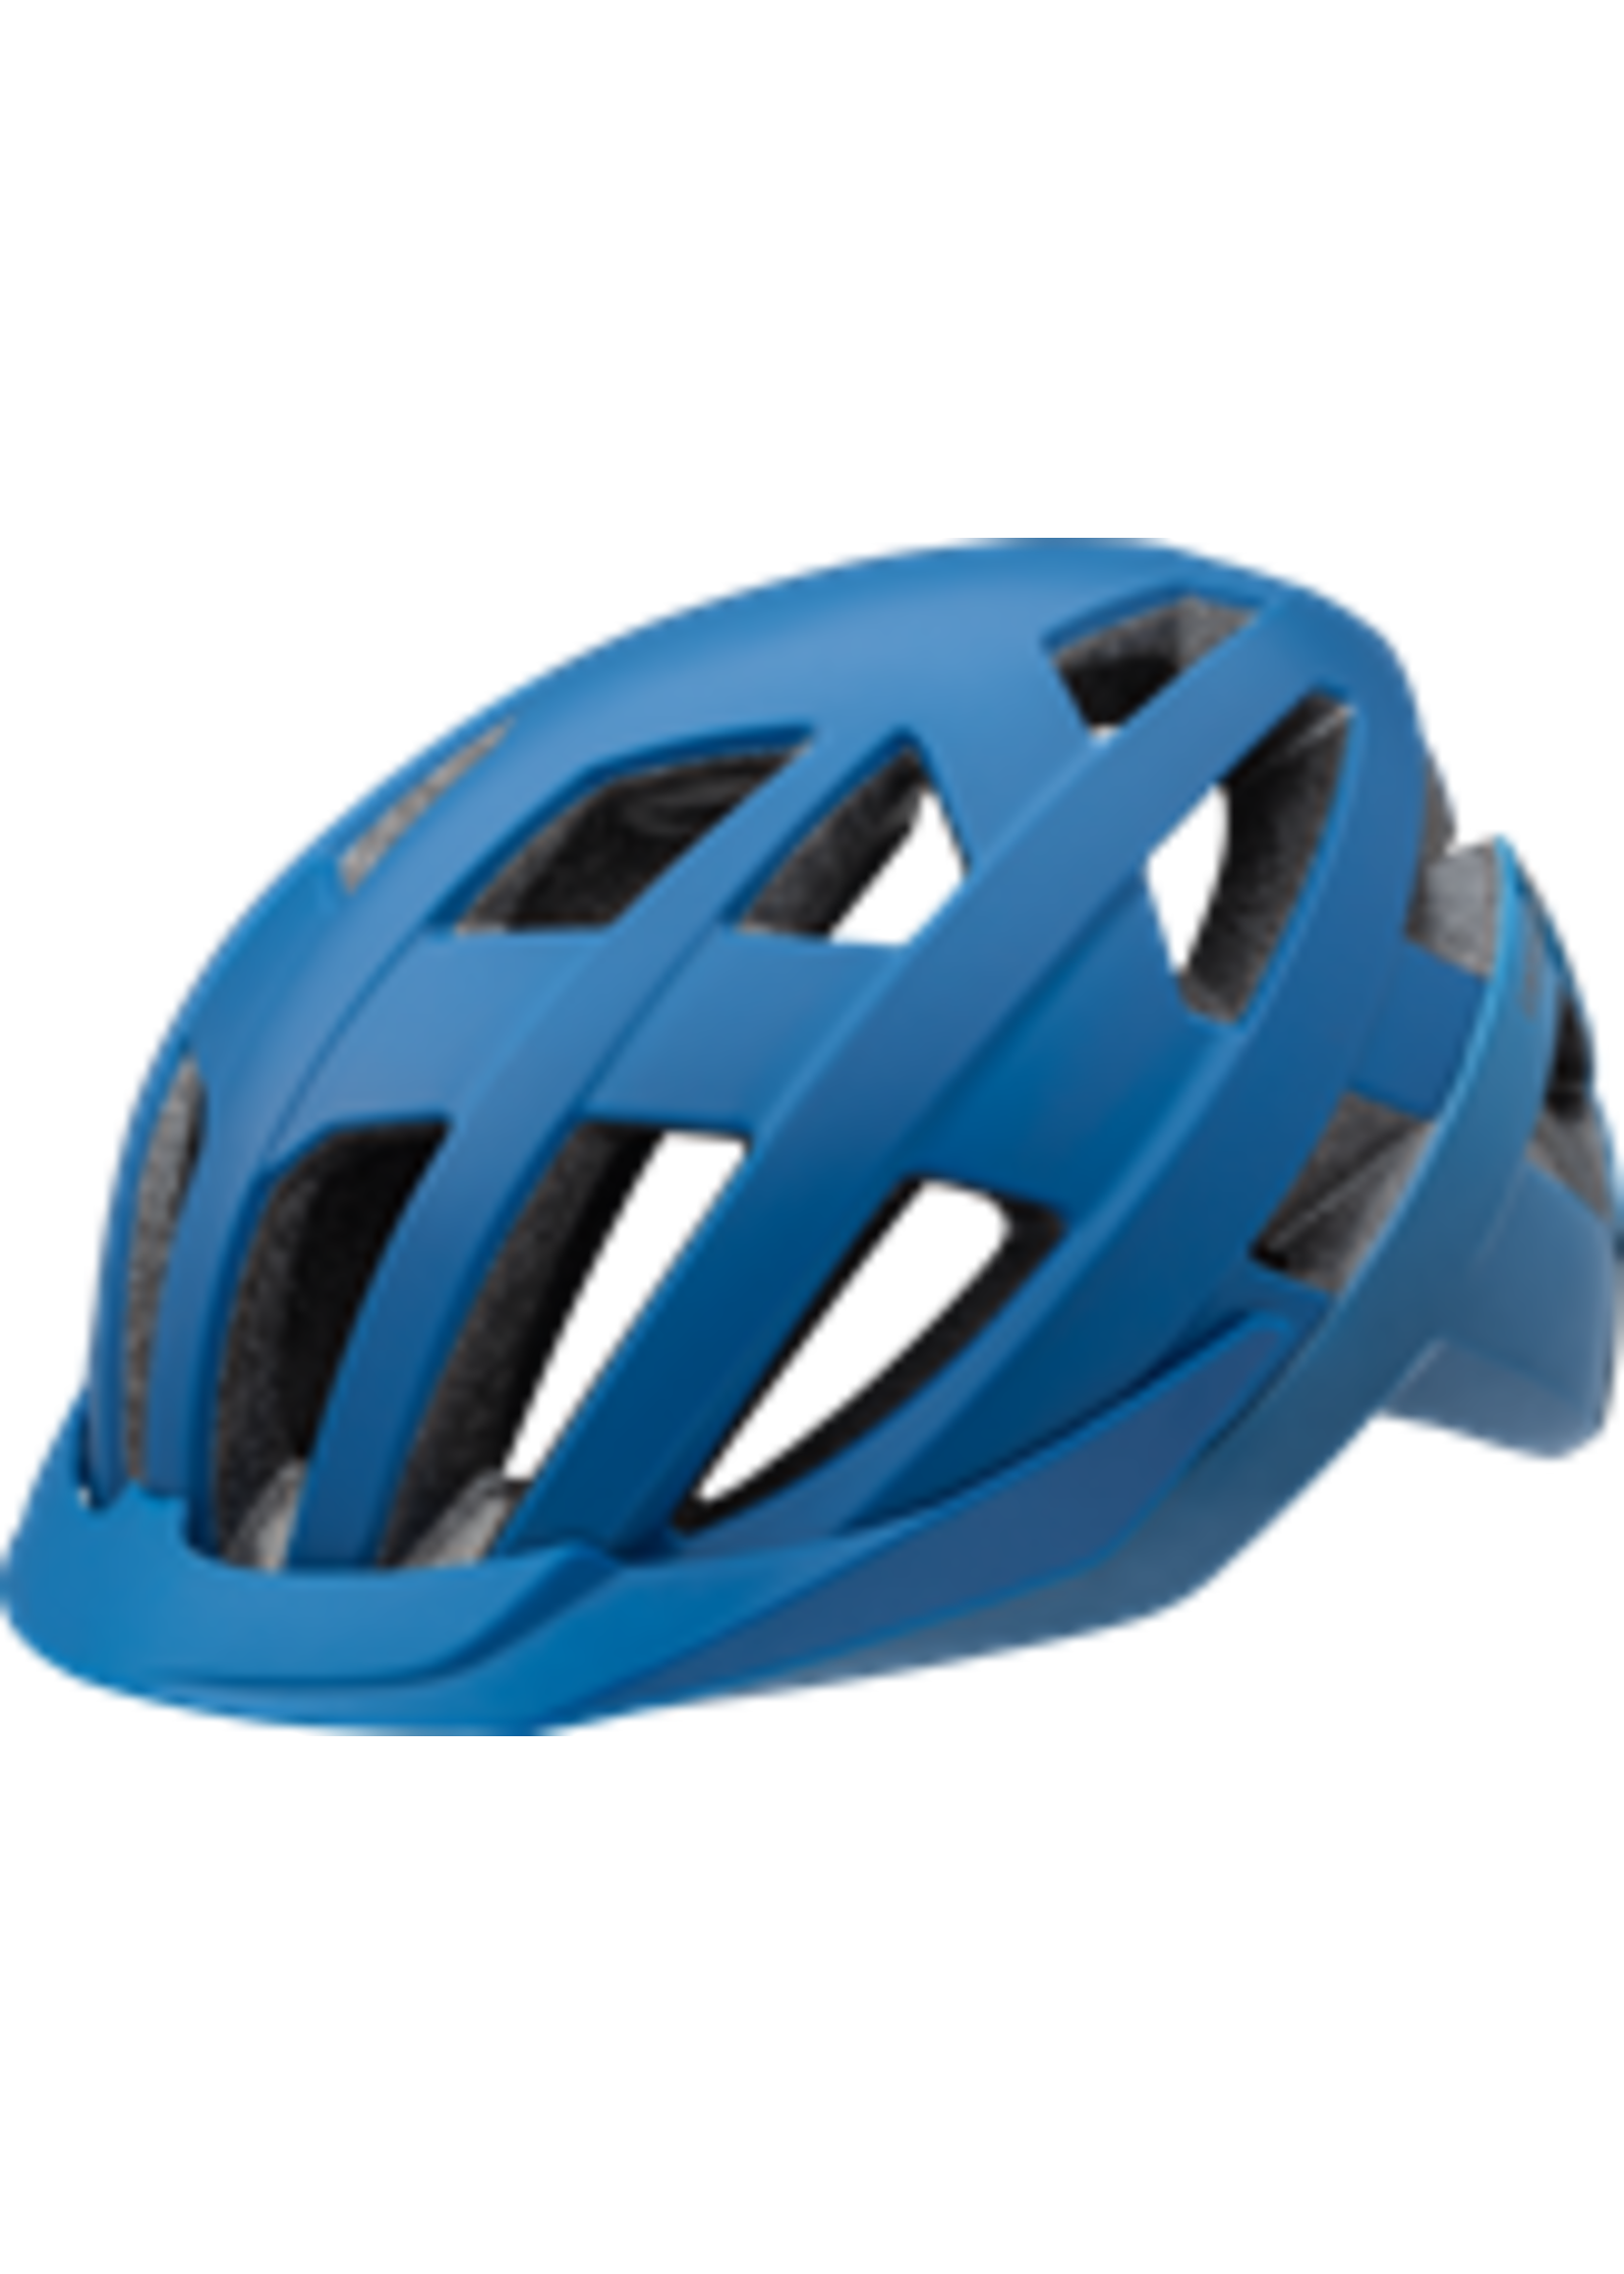 Cannondale Junction MIPS CSPC Adult Helmet